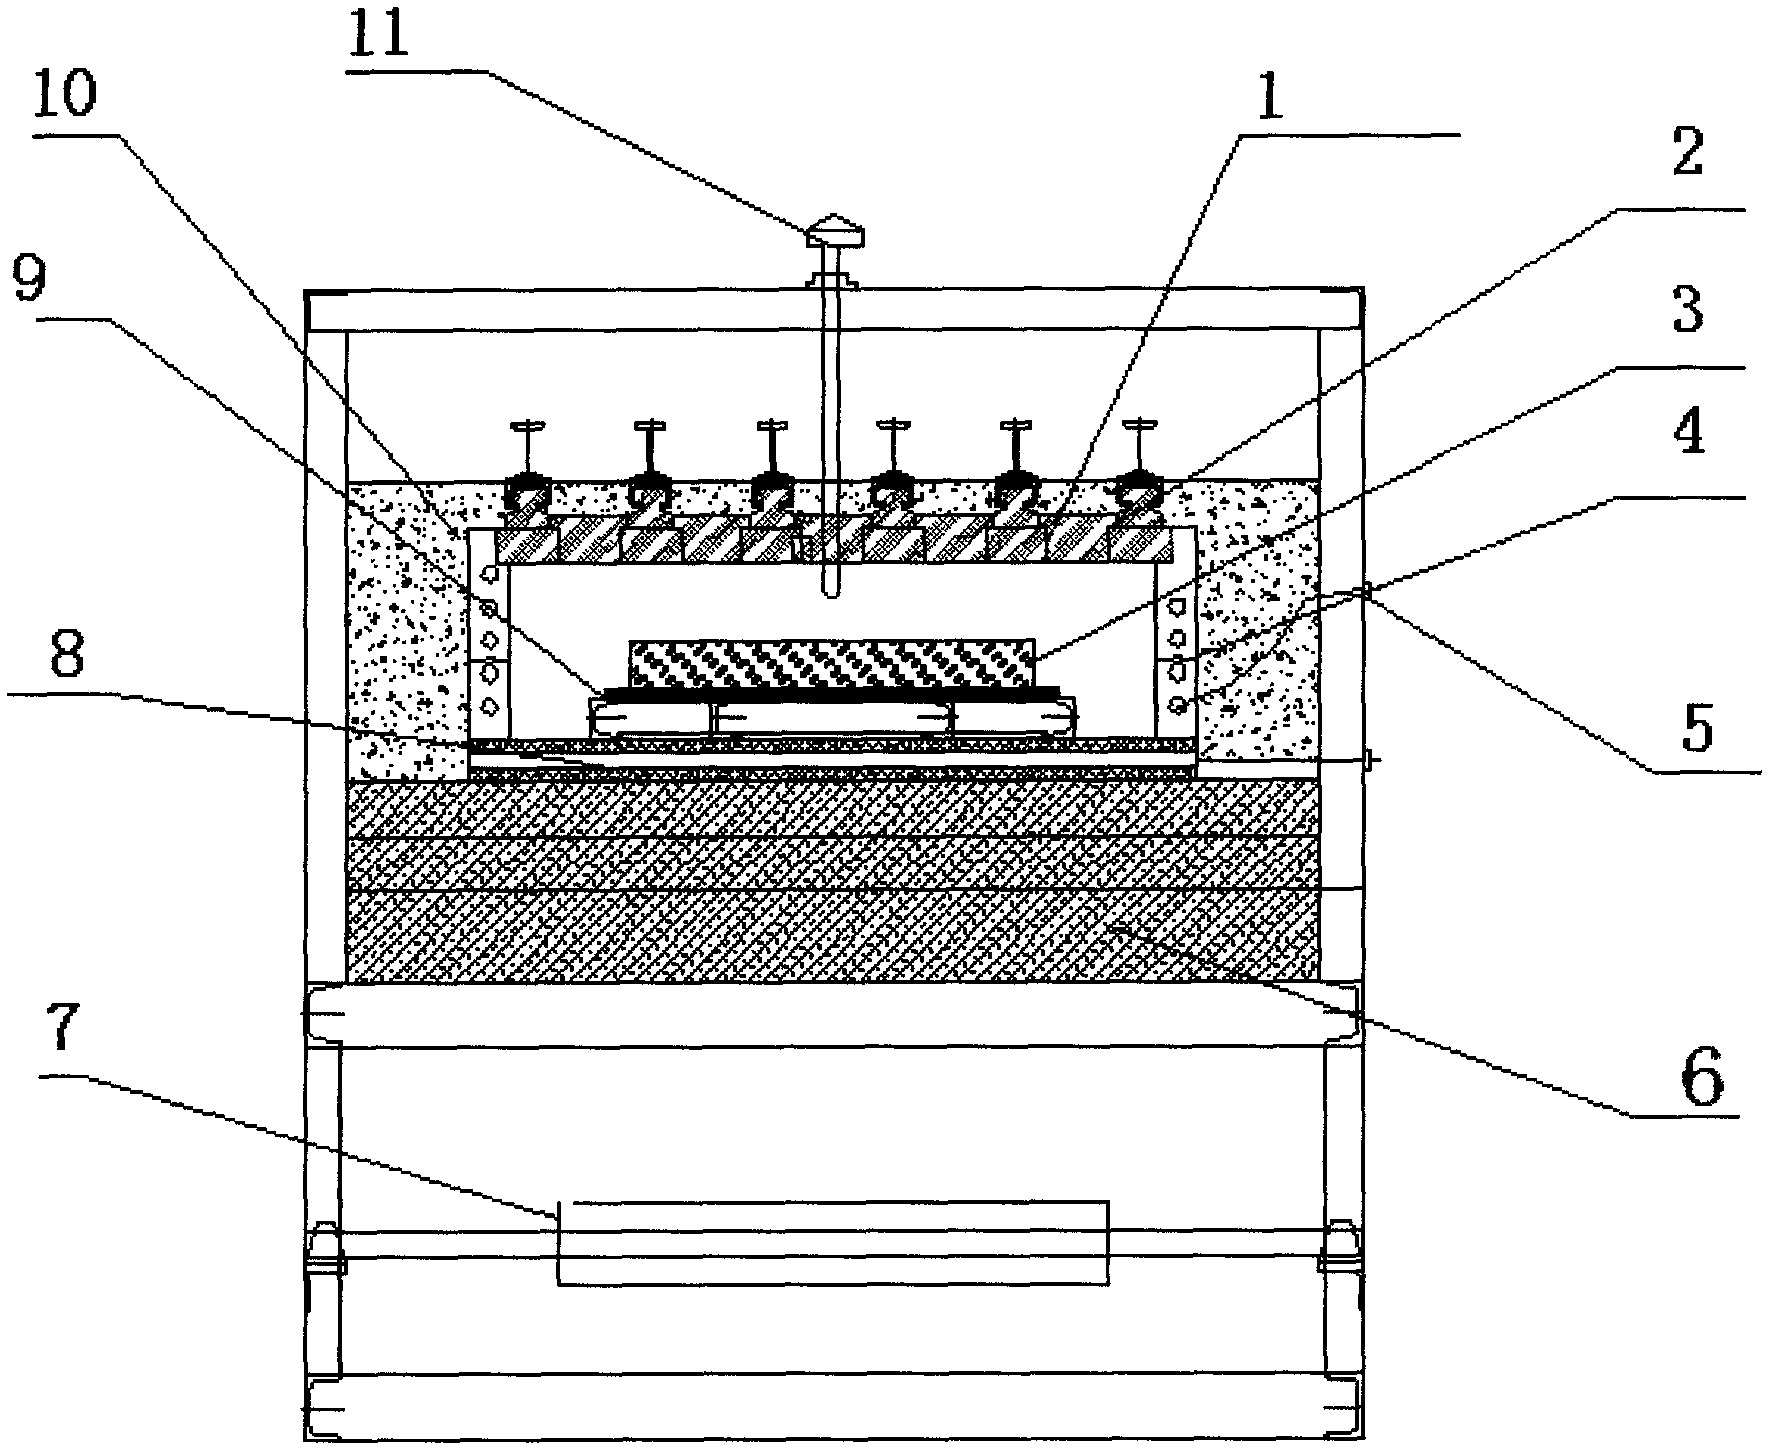 High-precision annealing furnace